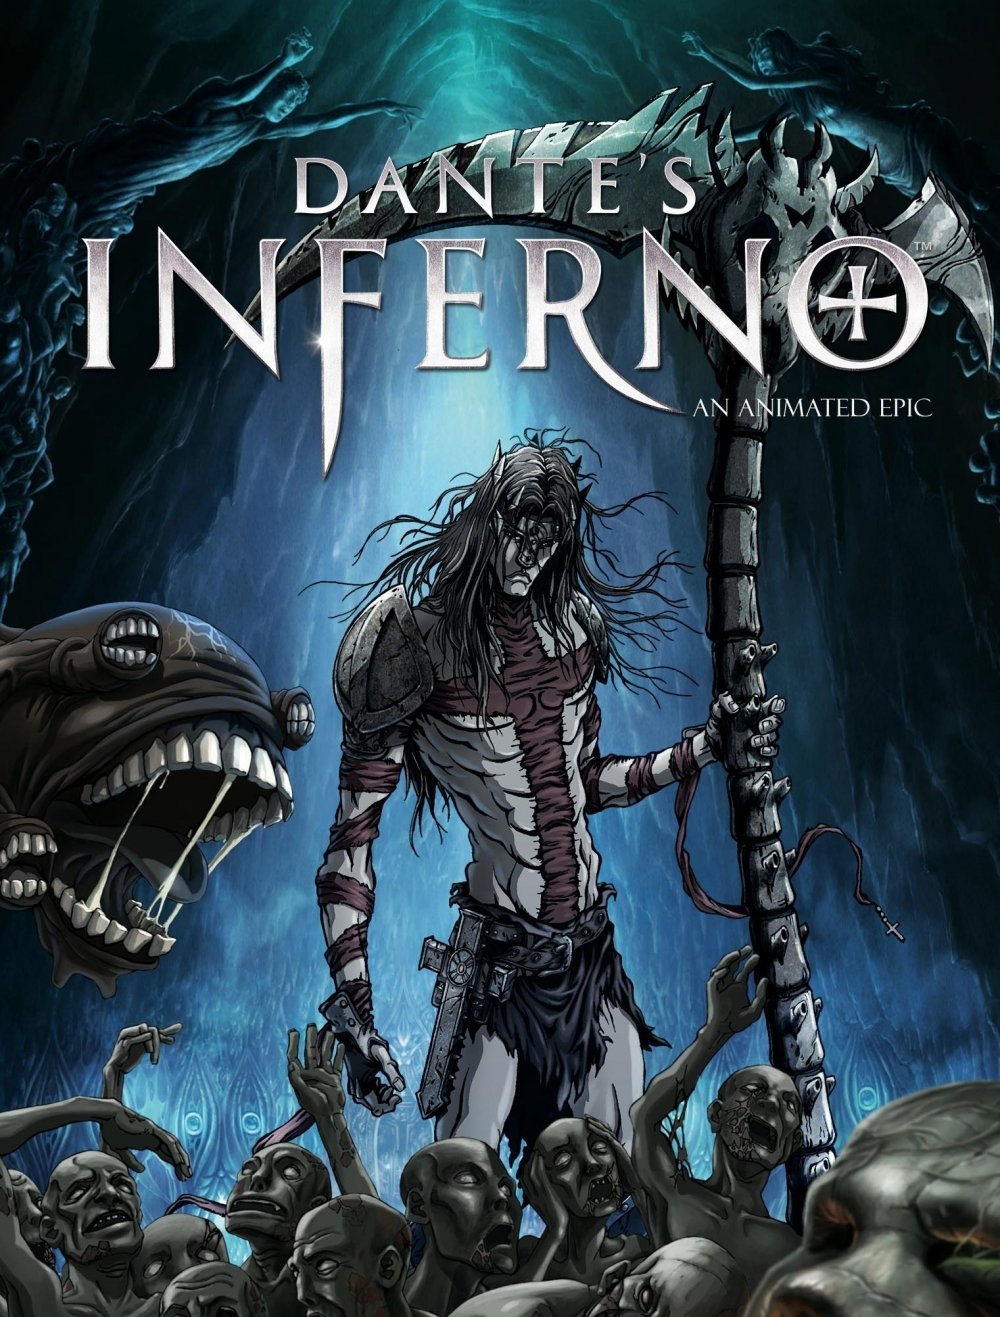 Christopher Tin - Dante's Inferno